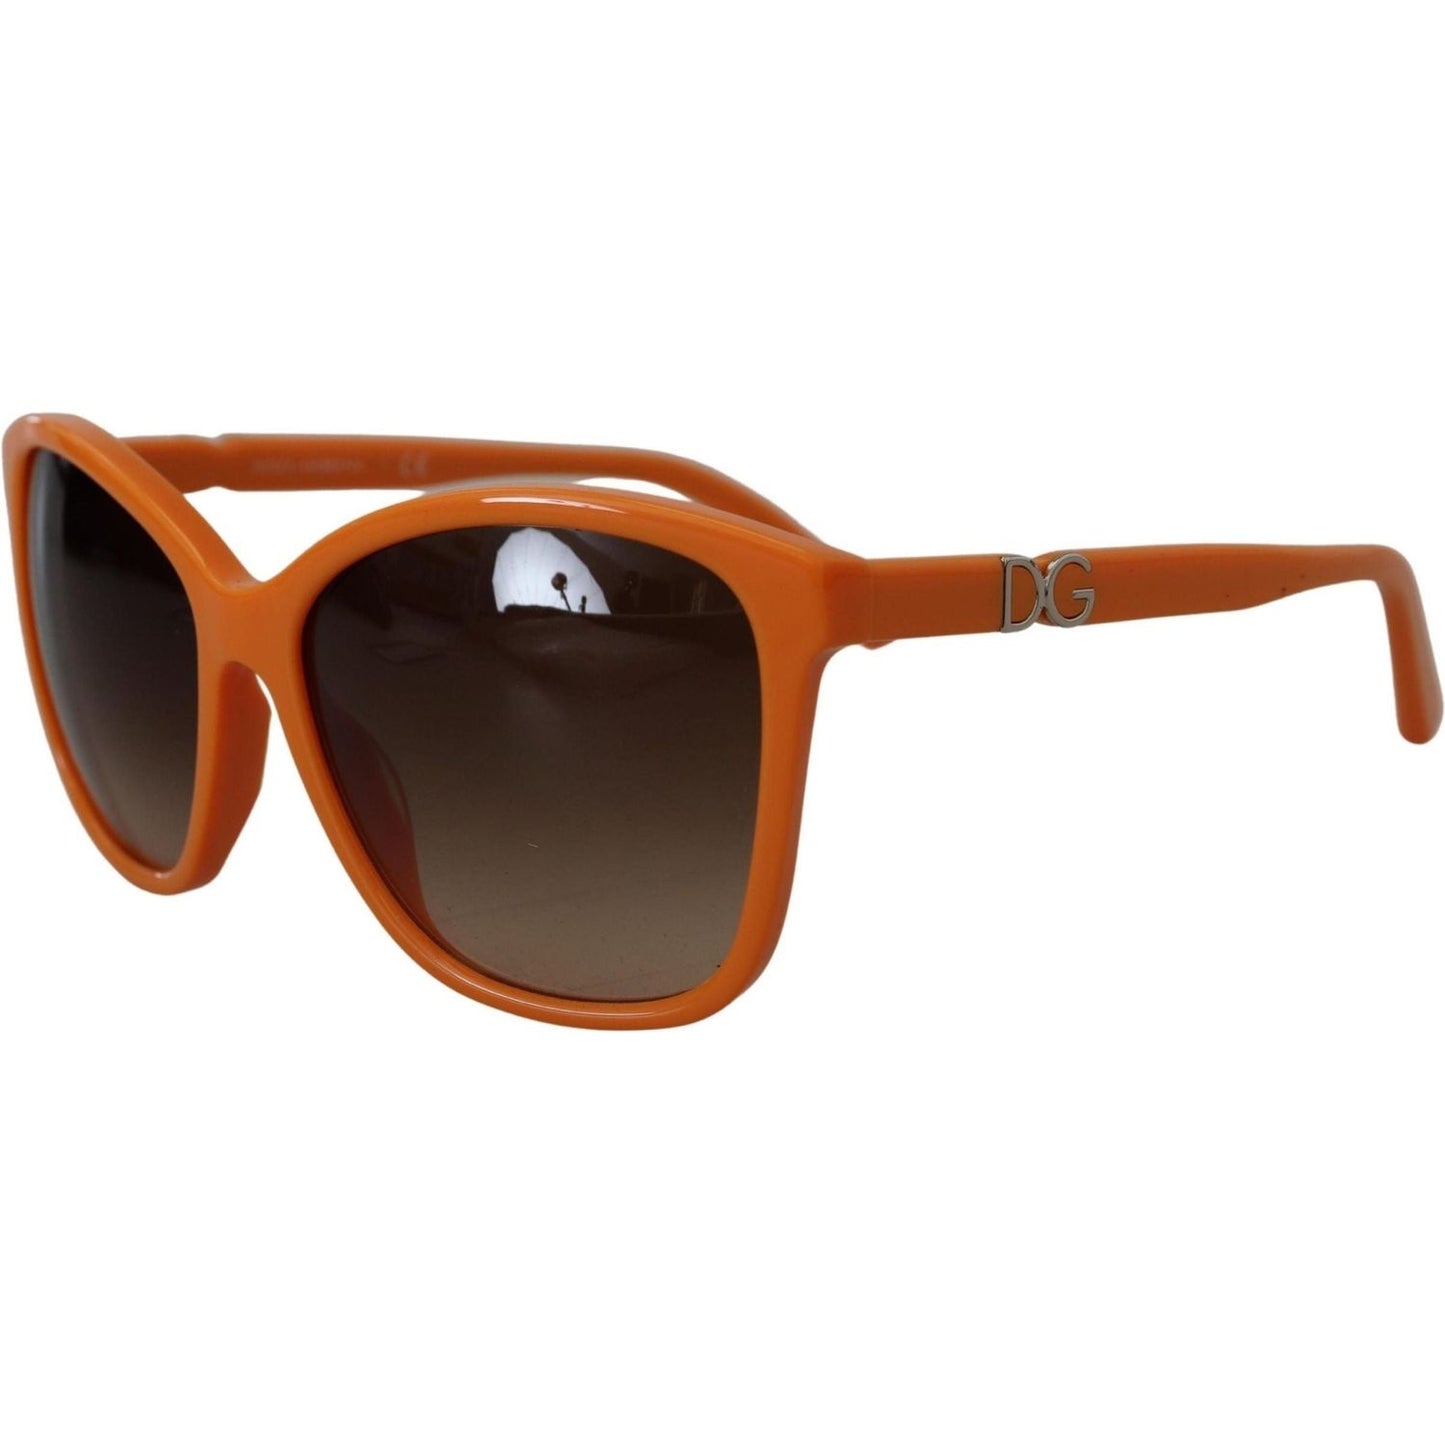 Dolce & Gabbana Chic Orange Round Sunglasses for Women orange-acetate-frame-round-shades-dg4170pm-sunglasses IMG_4508-1-scaled-1ac39f10-bdd.jpg